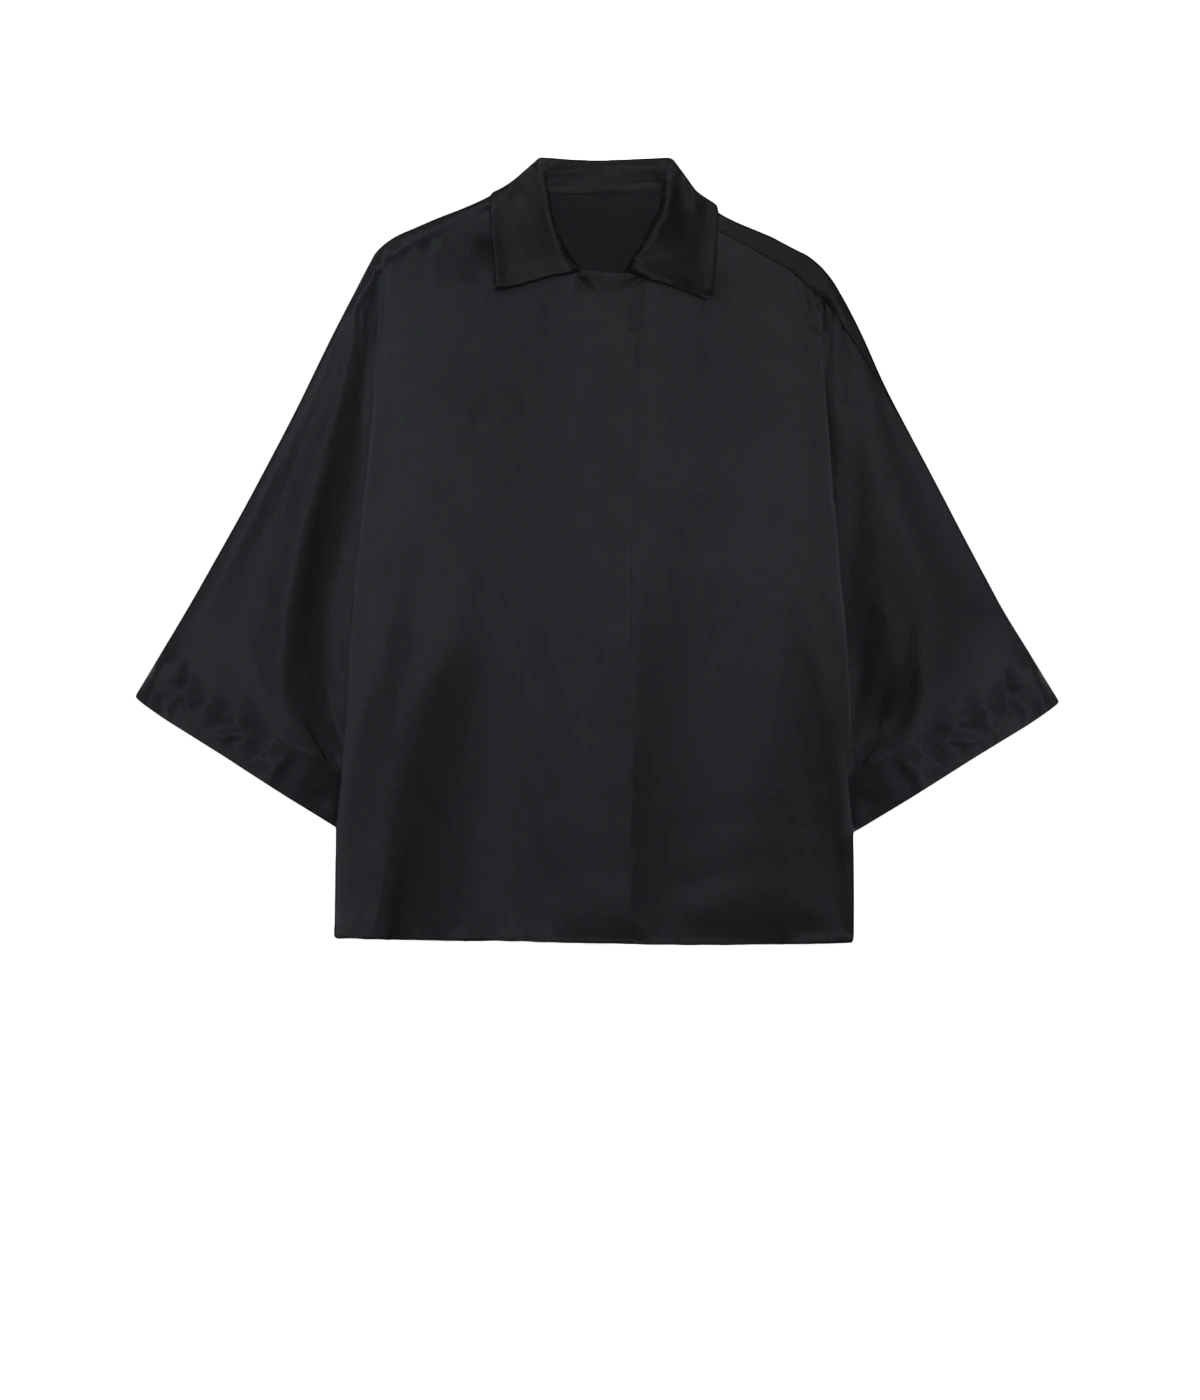 black short sleeve silk shirt by Anine Bing